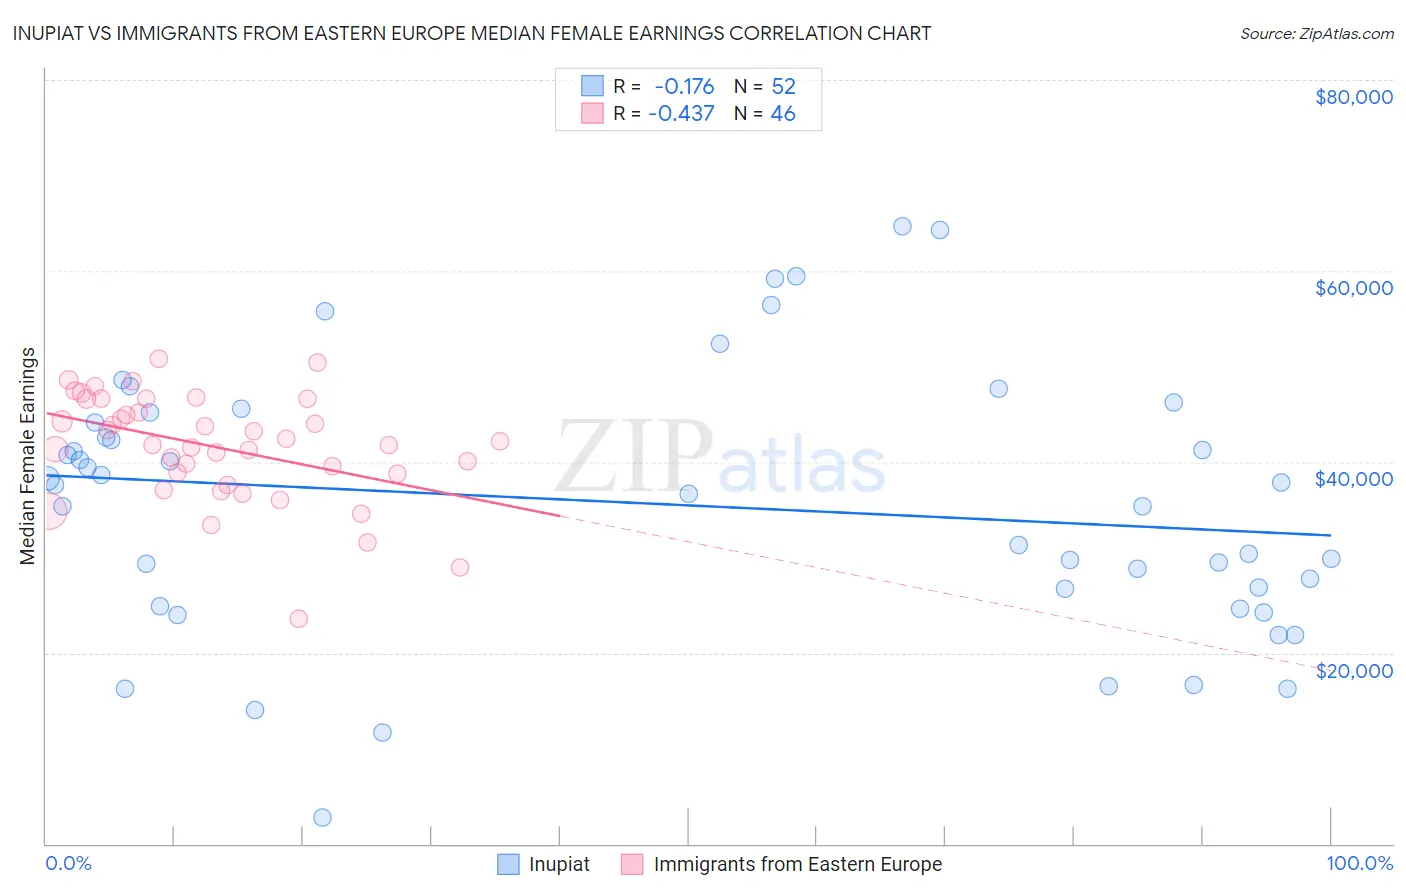 Inupiat vs Immigrants from Eastern Europe Median Female Earnings